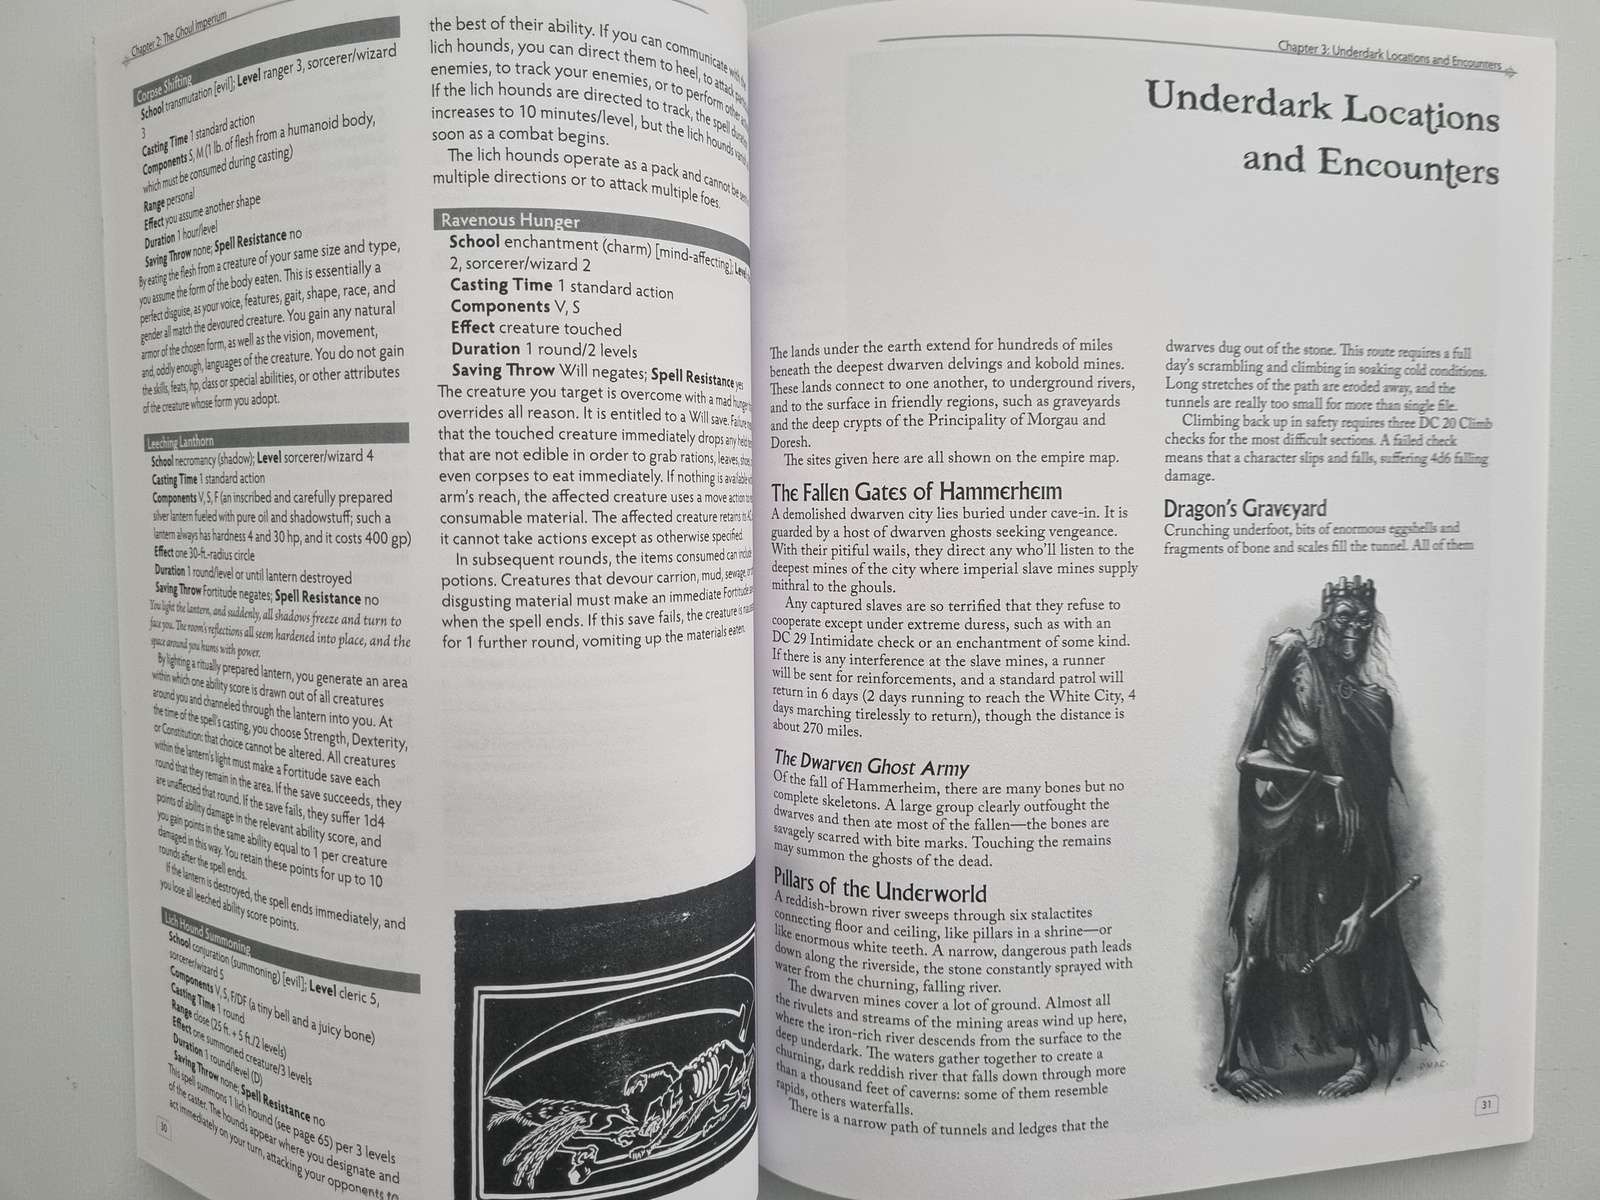 Pathfinder: Imperial Gazetteer Ghouls & Vampires of the Midgard Campaign Setting